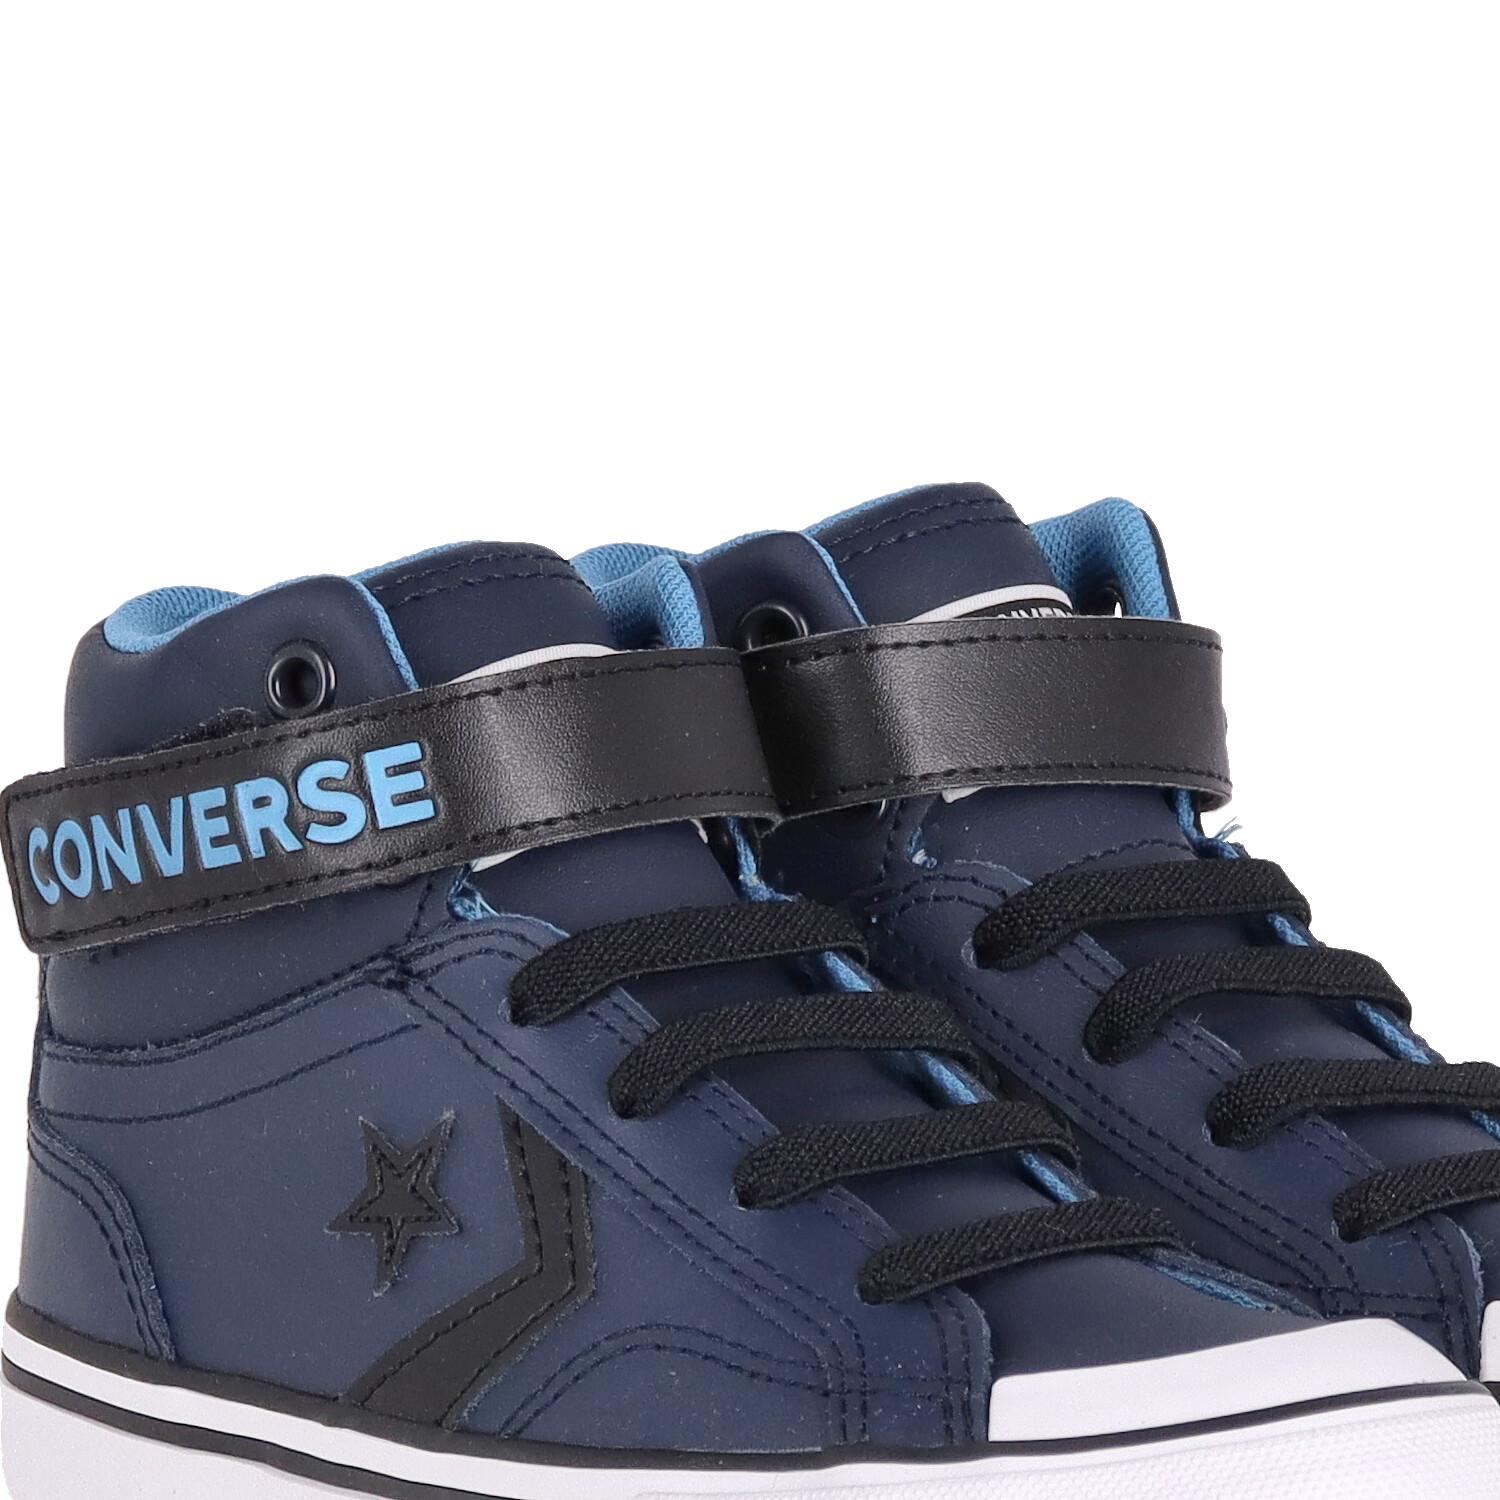 Converse Pro Blaze Hi Strap OBSIDIAN BLACK DUTCH BLUE 